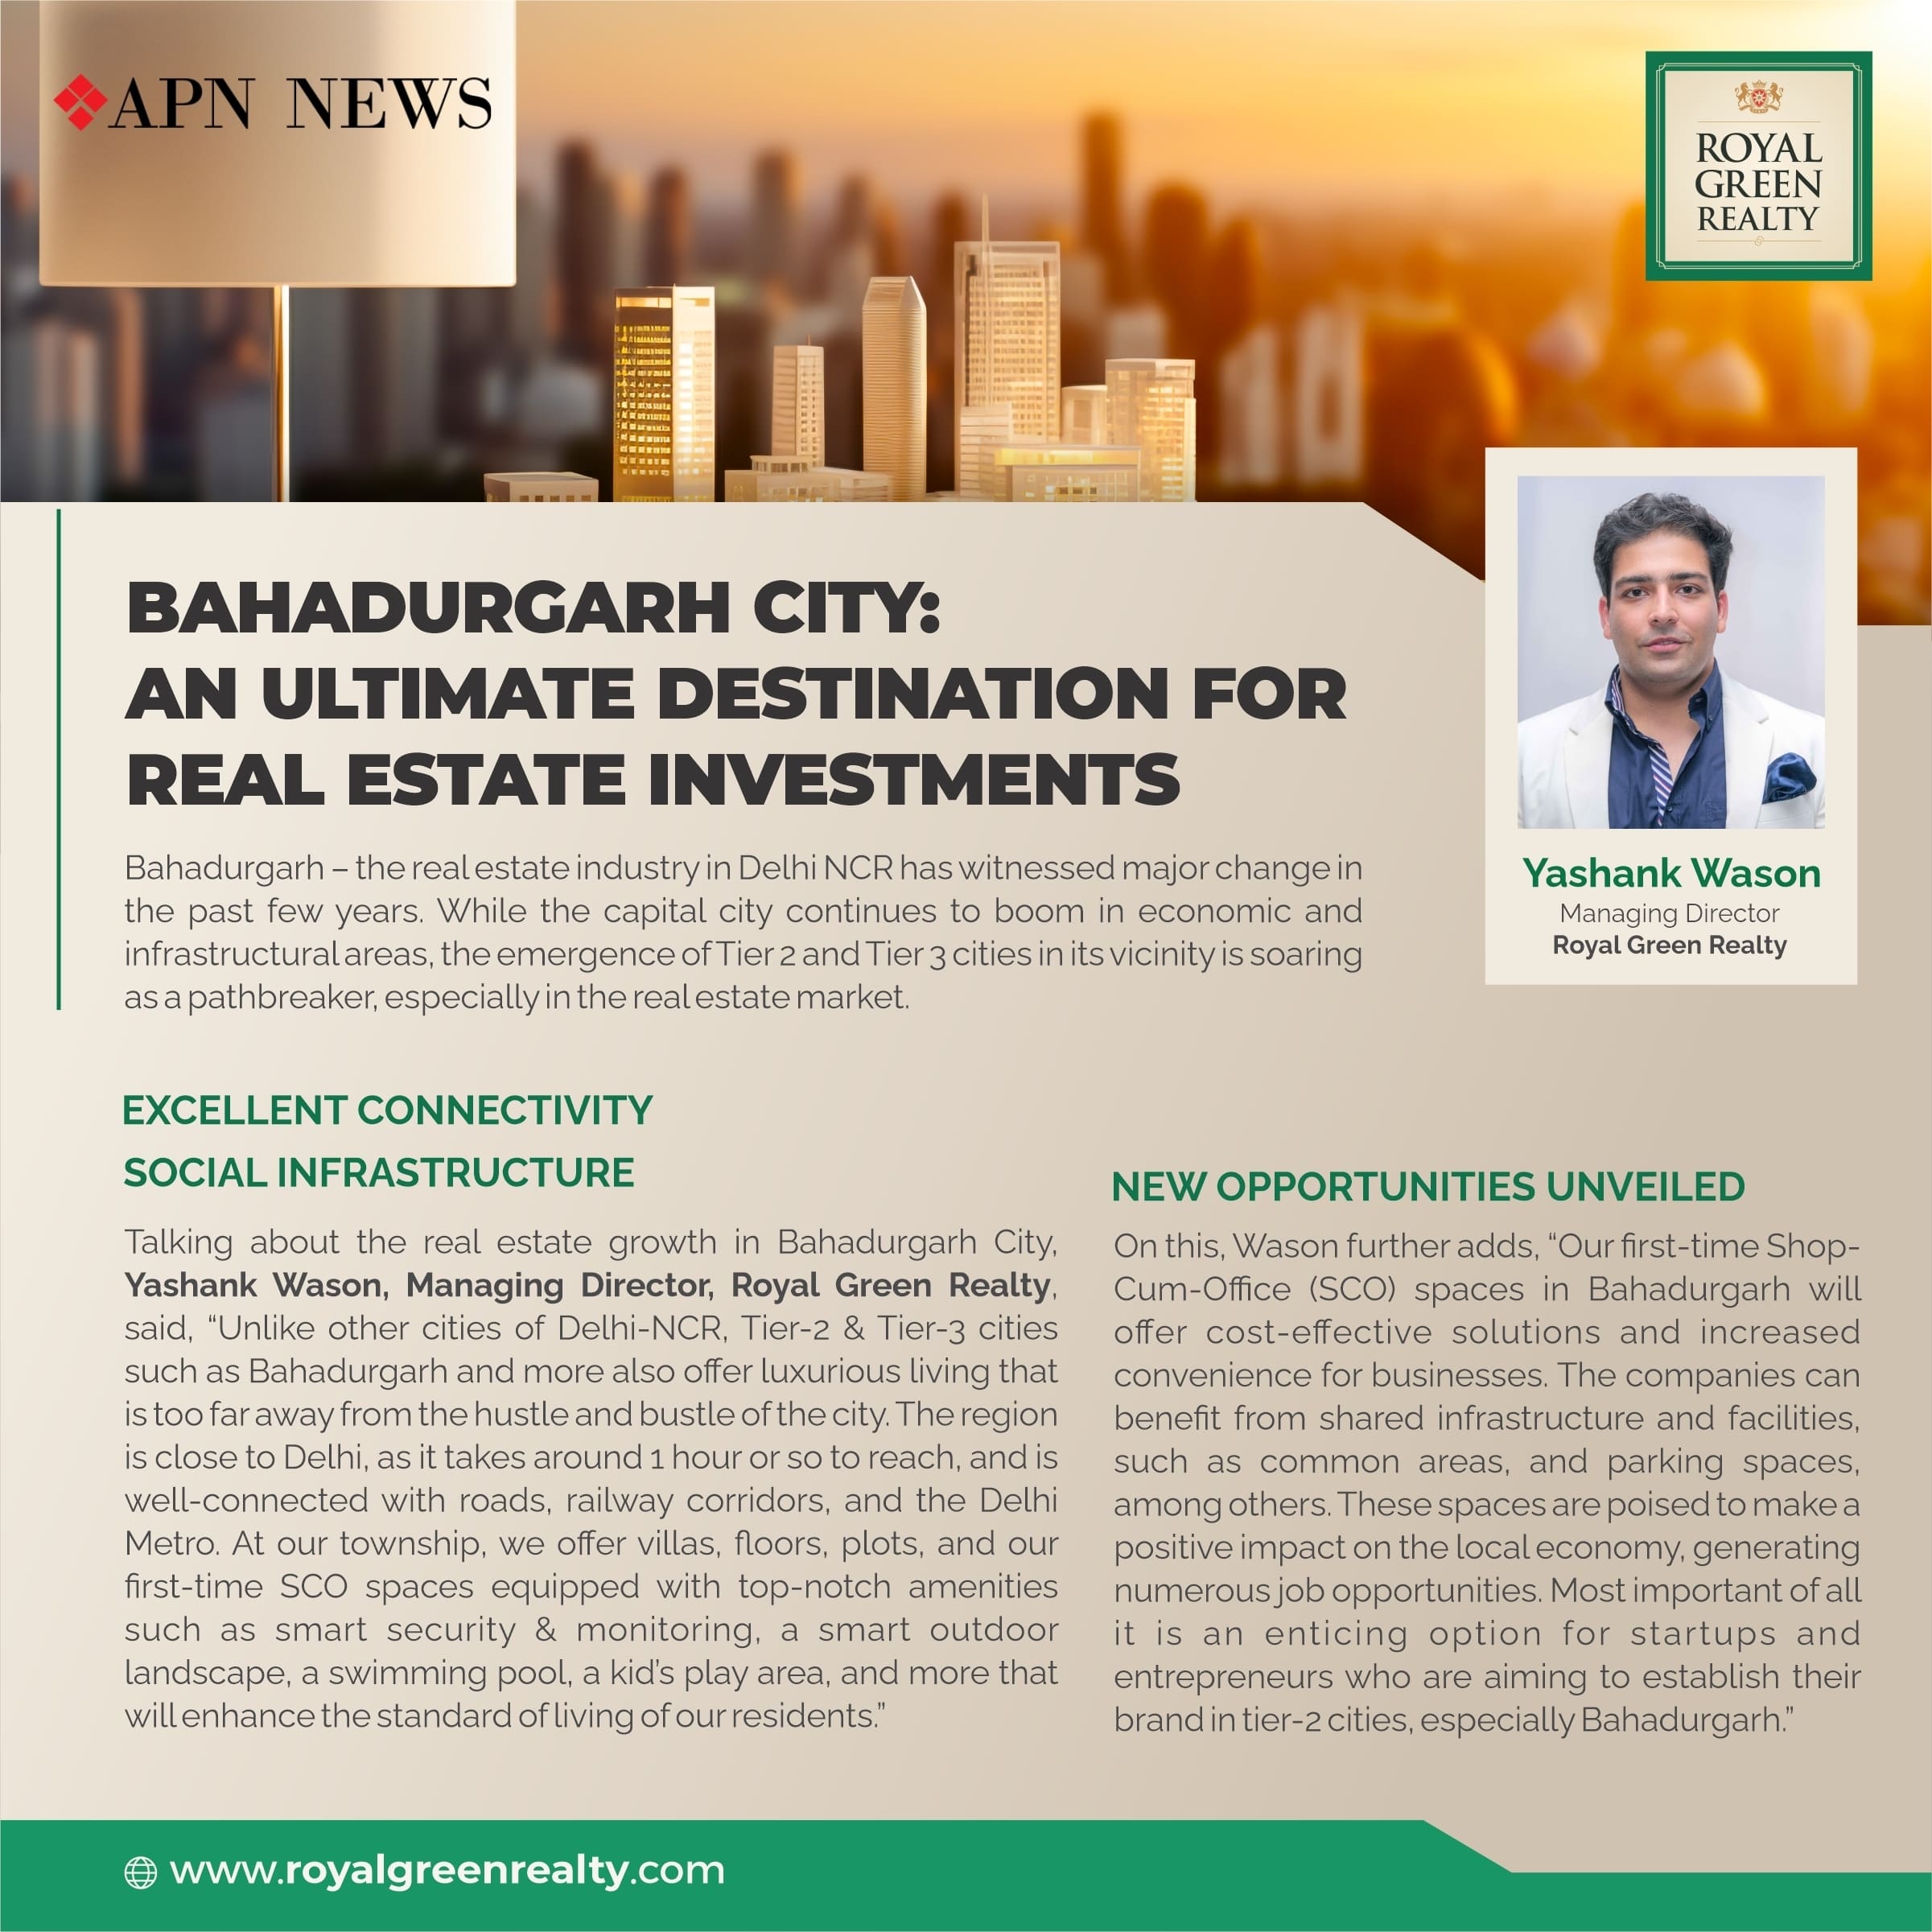 Bahadurgarh: A hidden gem for real estate investors.